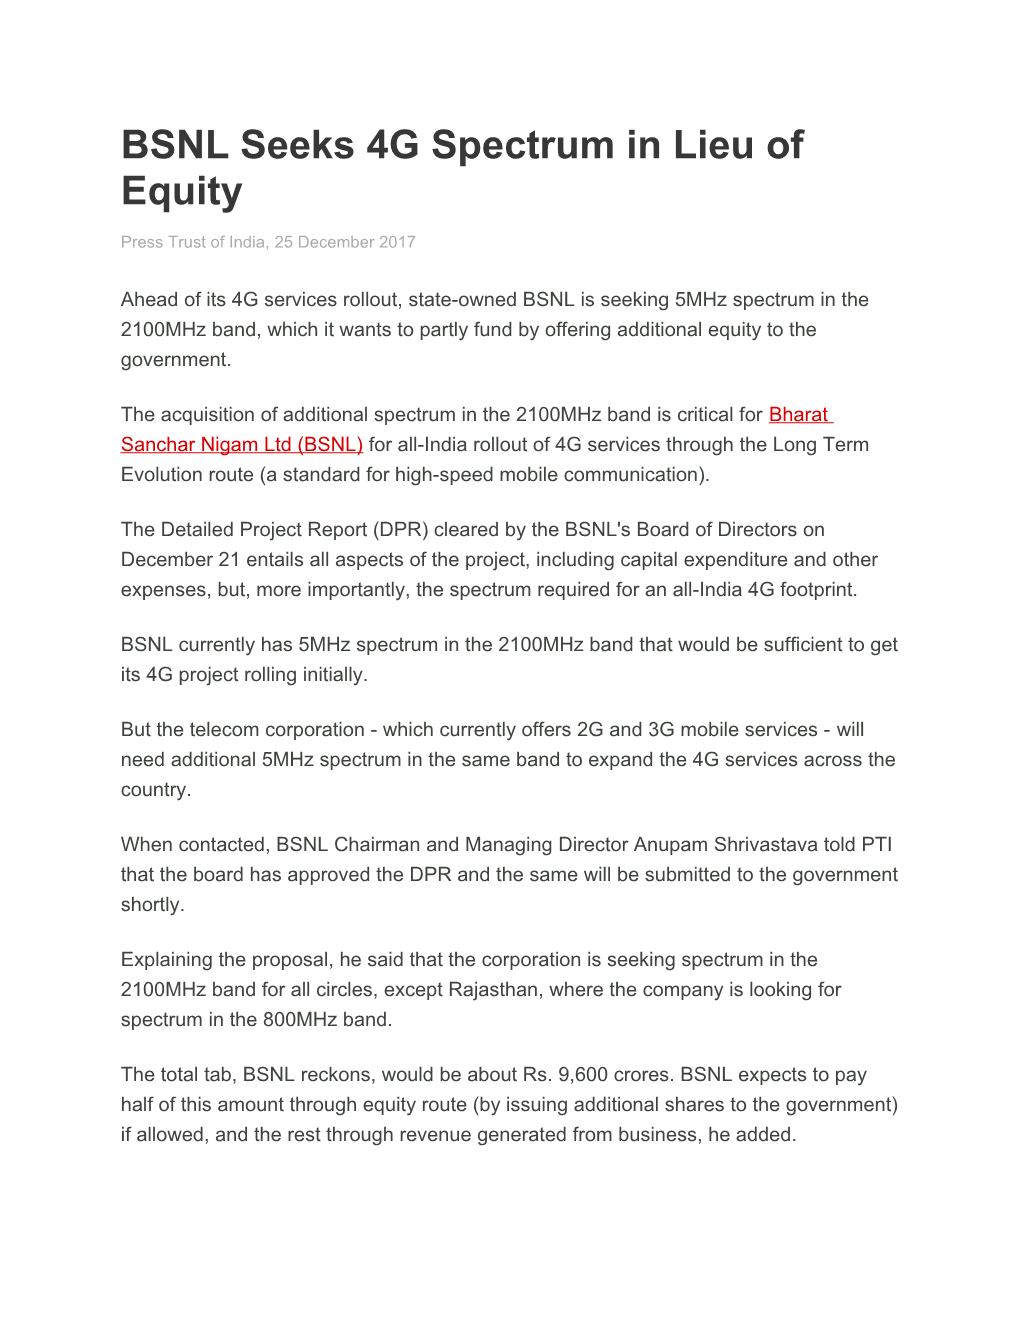 BSNL Seeks 4G Spectrum in Lieu of Equity